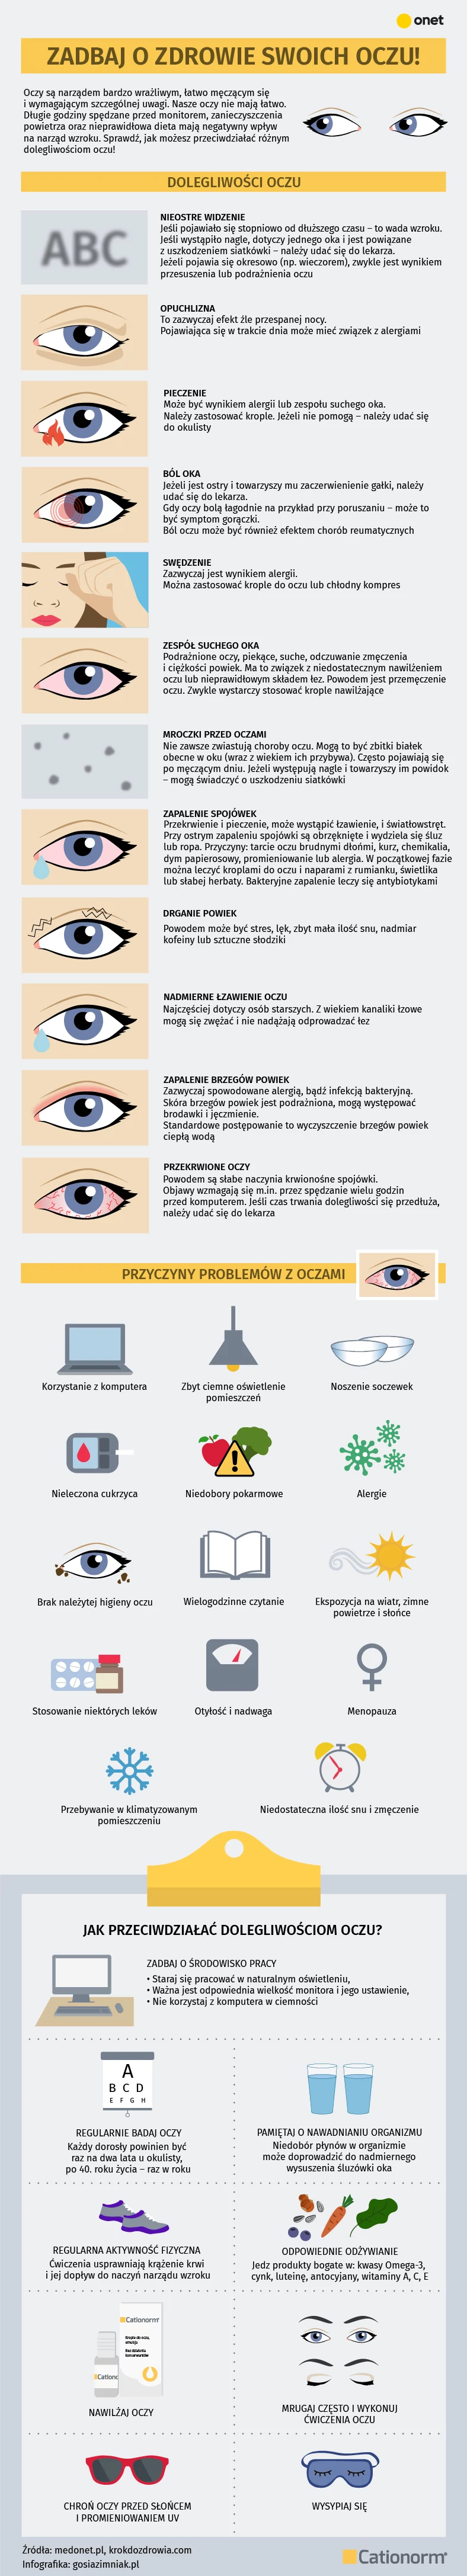 dolegliwosci oczu-01 infografika cationorm 